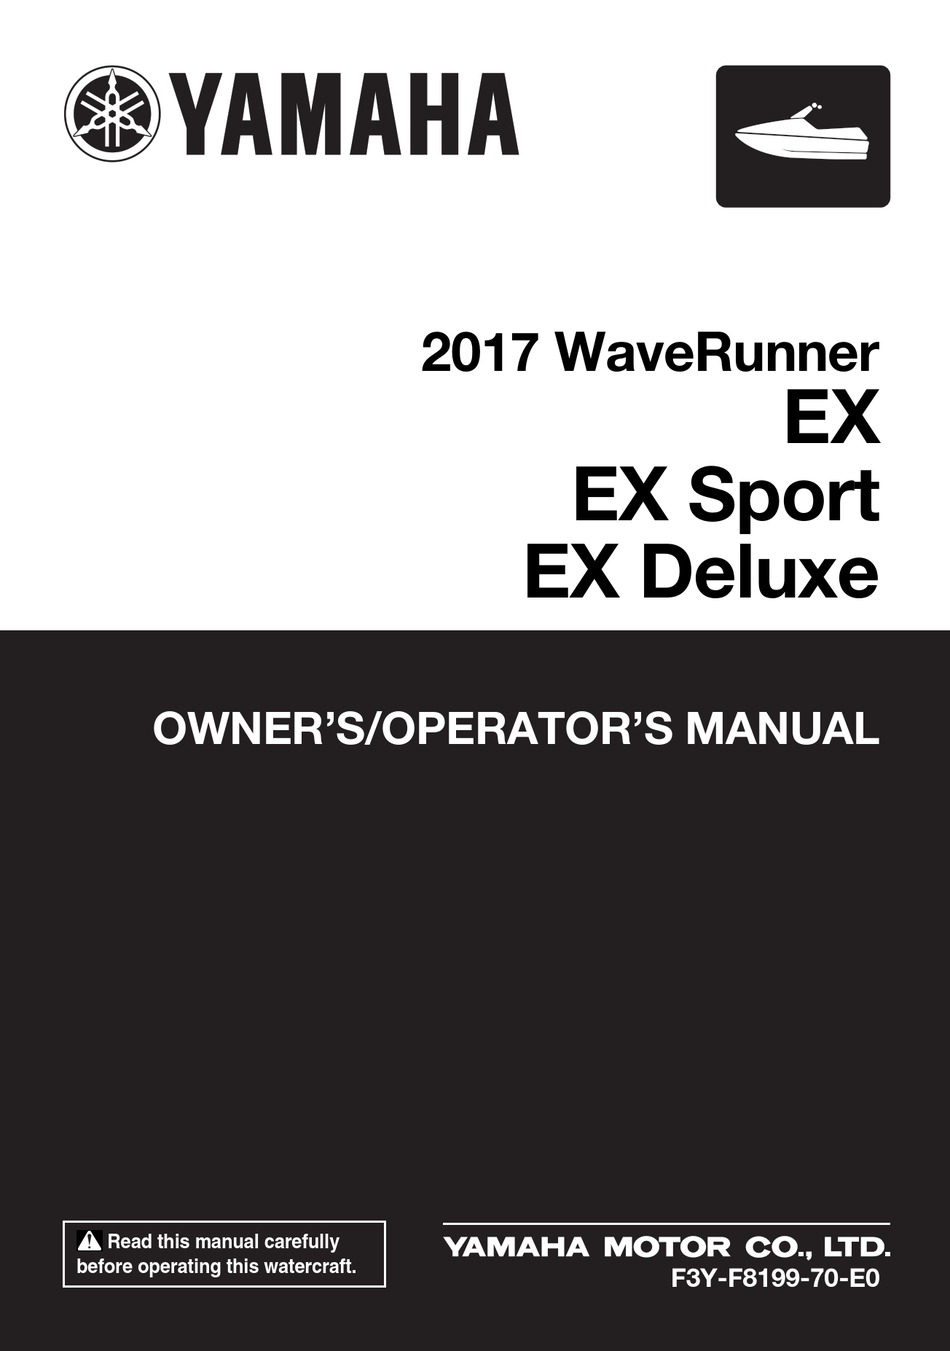 YAMAHA 2017 WAVERUNNER EX OWNER'S/OPERATOR'S MANUAL Pdf Download